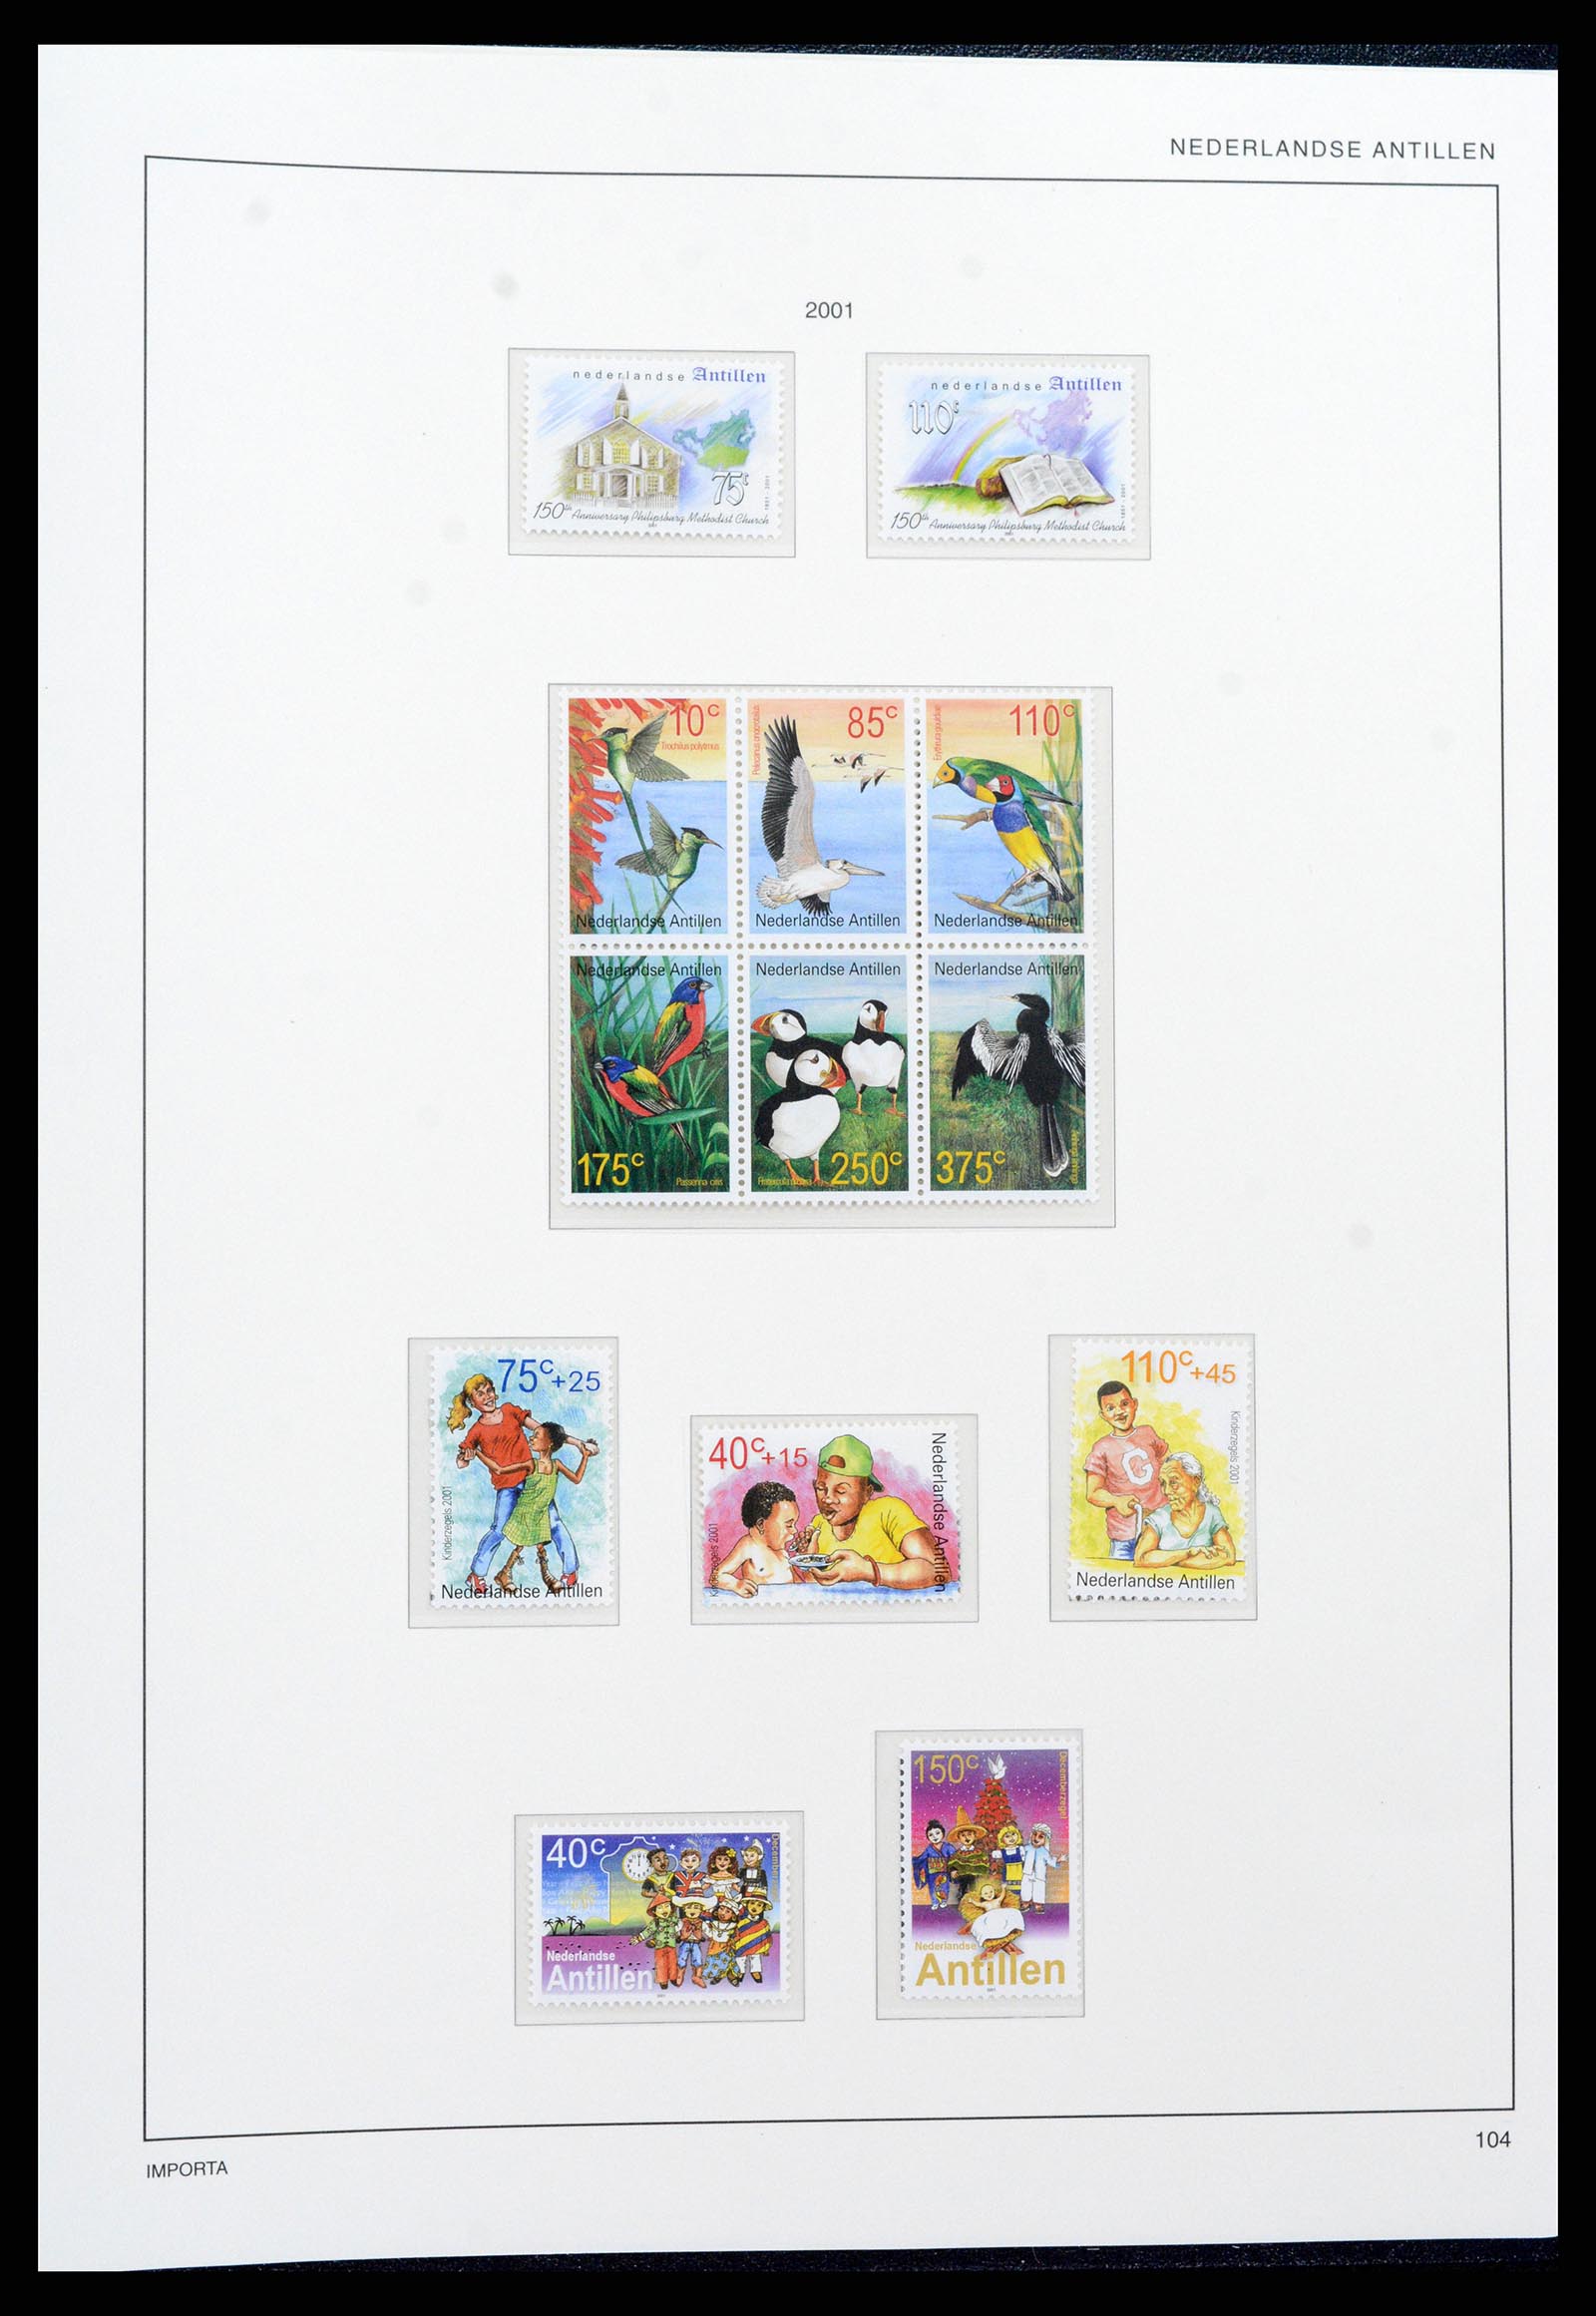 37693 106 - Stamp collection 37693 Netherlands Antilles 1949-2001.